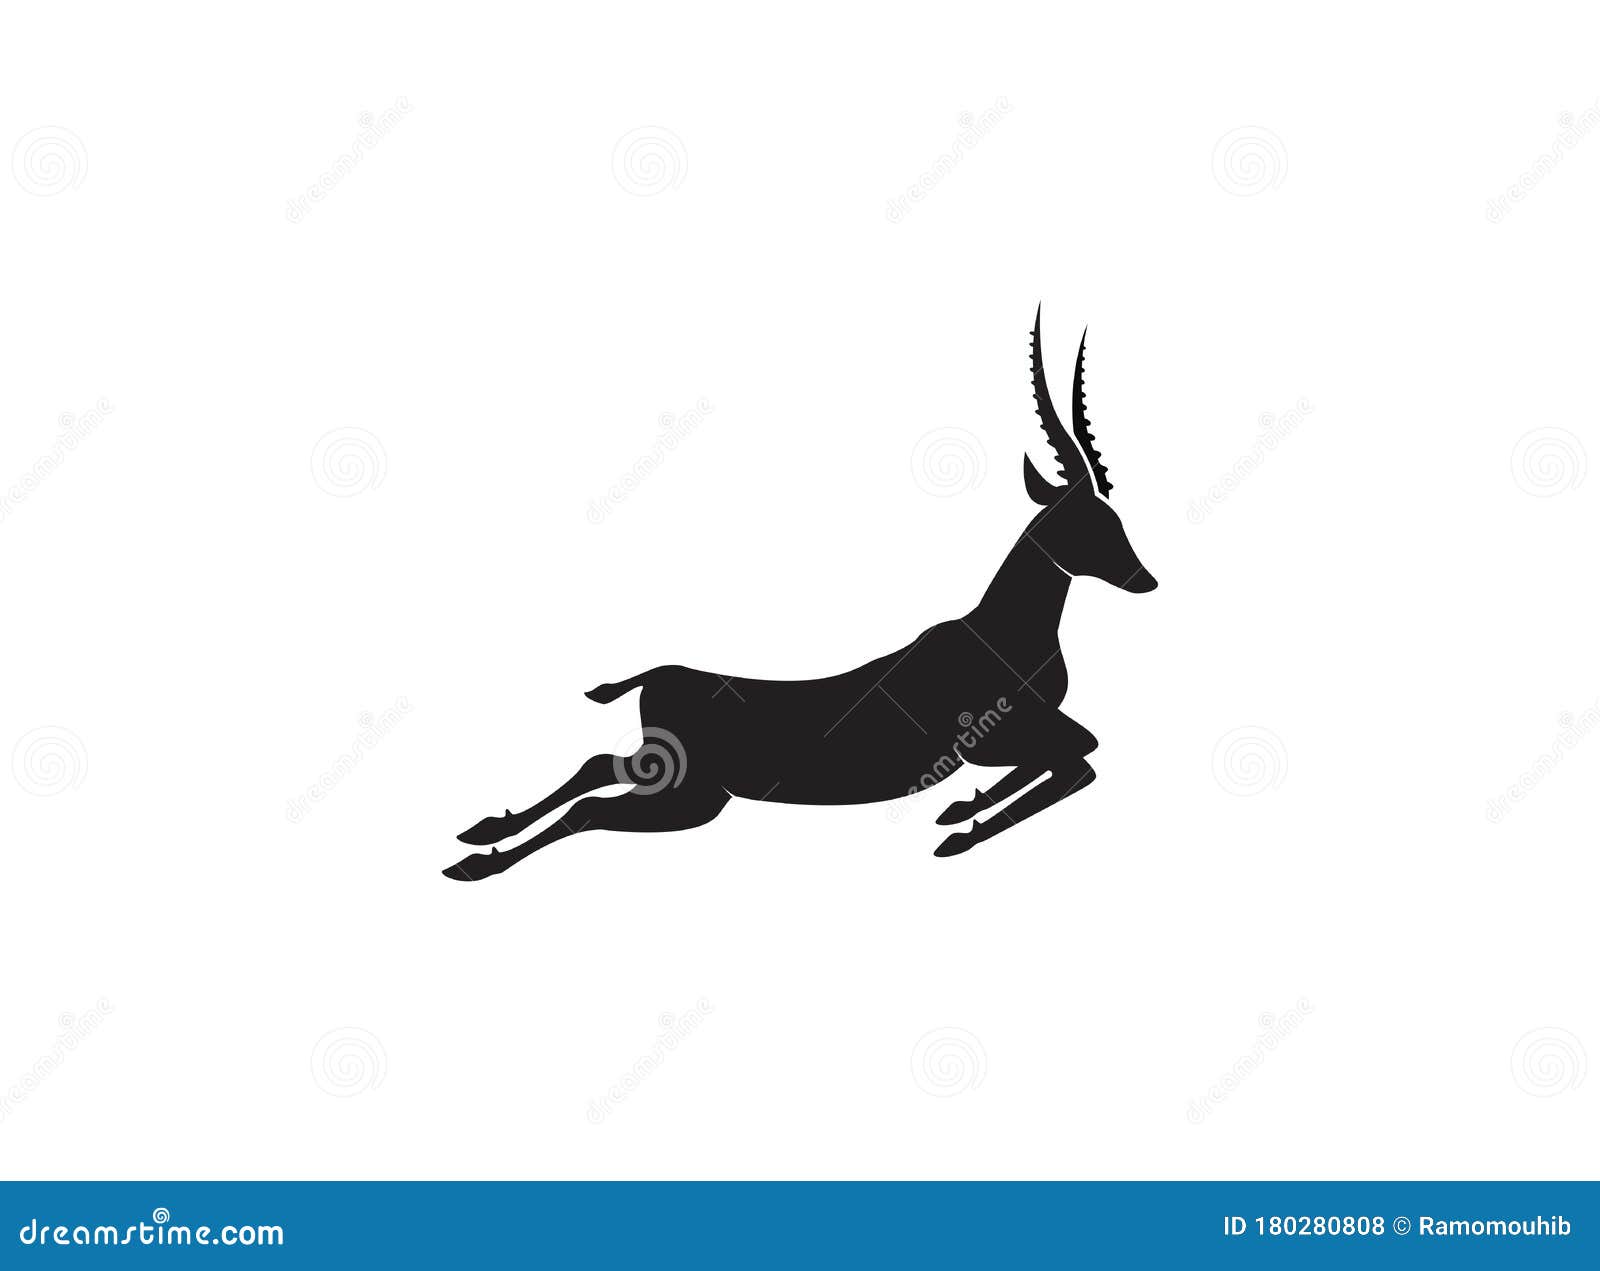 gazelle silhouette jump black antelope. ghazal run  stand side view   on white background